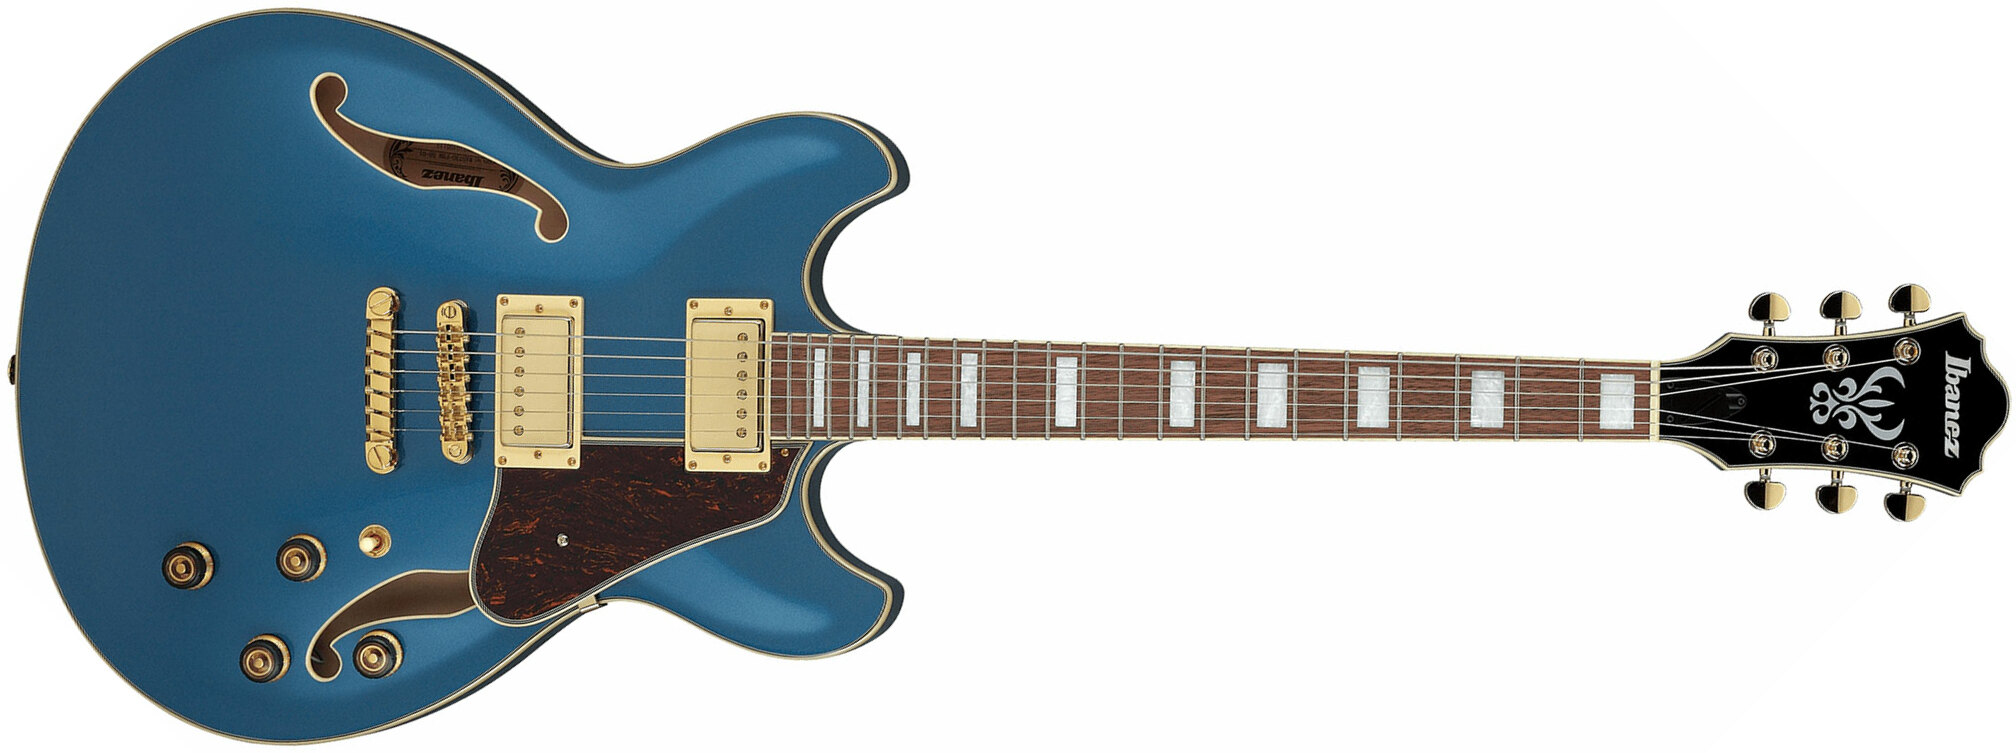 Ibanez As73g Pbm Artcore Hh Ht Noy - Prussian Blue Metallic - Semi hollow elektriche gitaar - Main picture